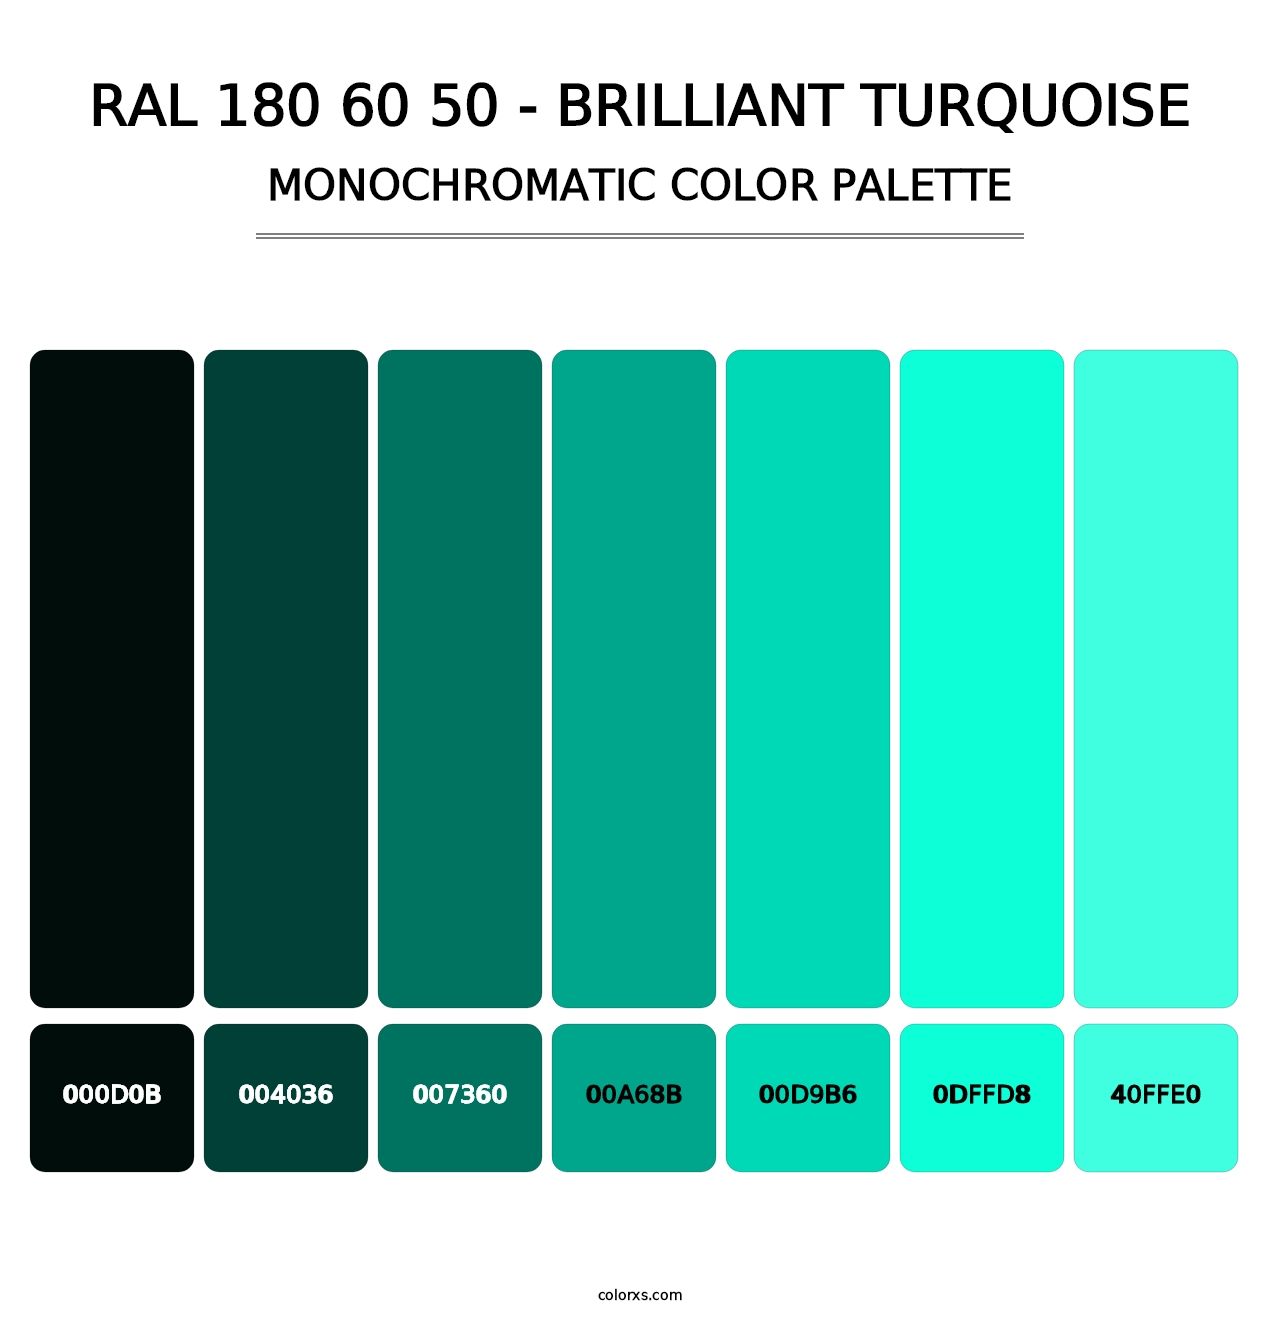 RAL 180 60 50 - Brilliant Turquoise - Monochromatic Color Palette